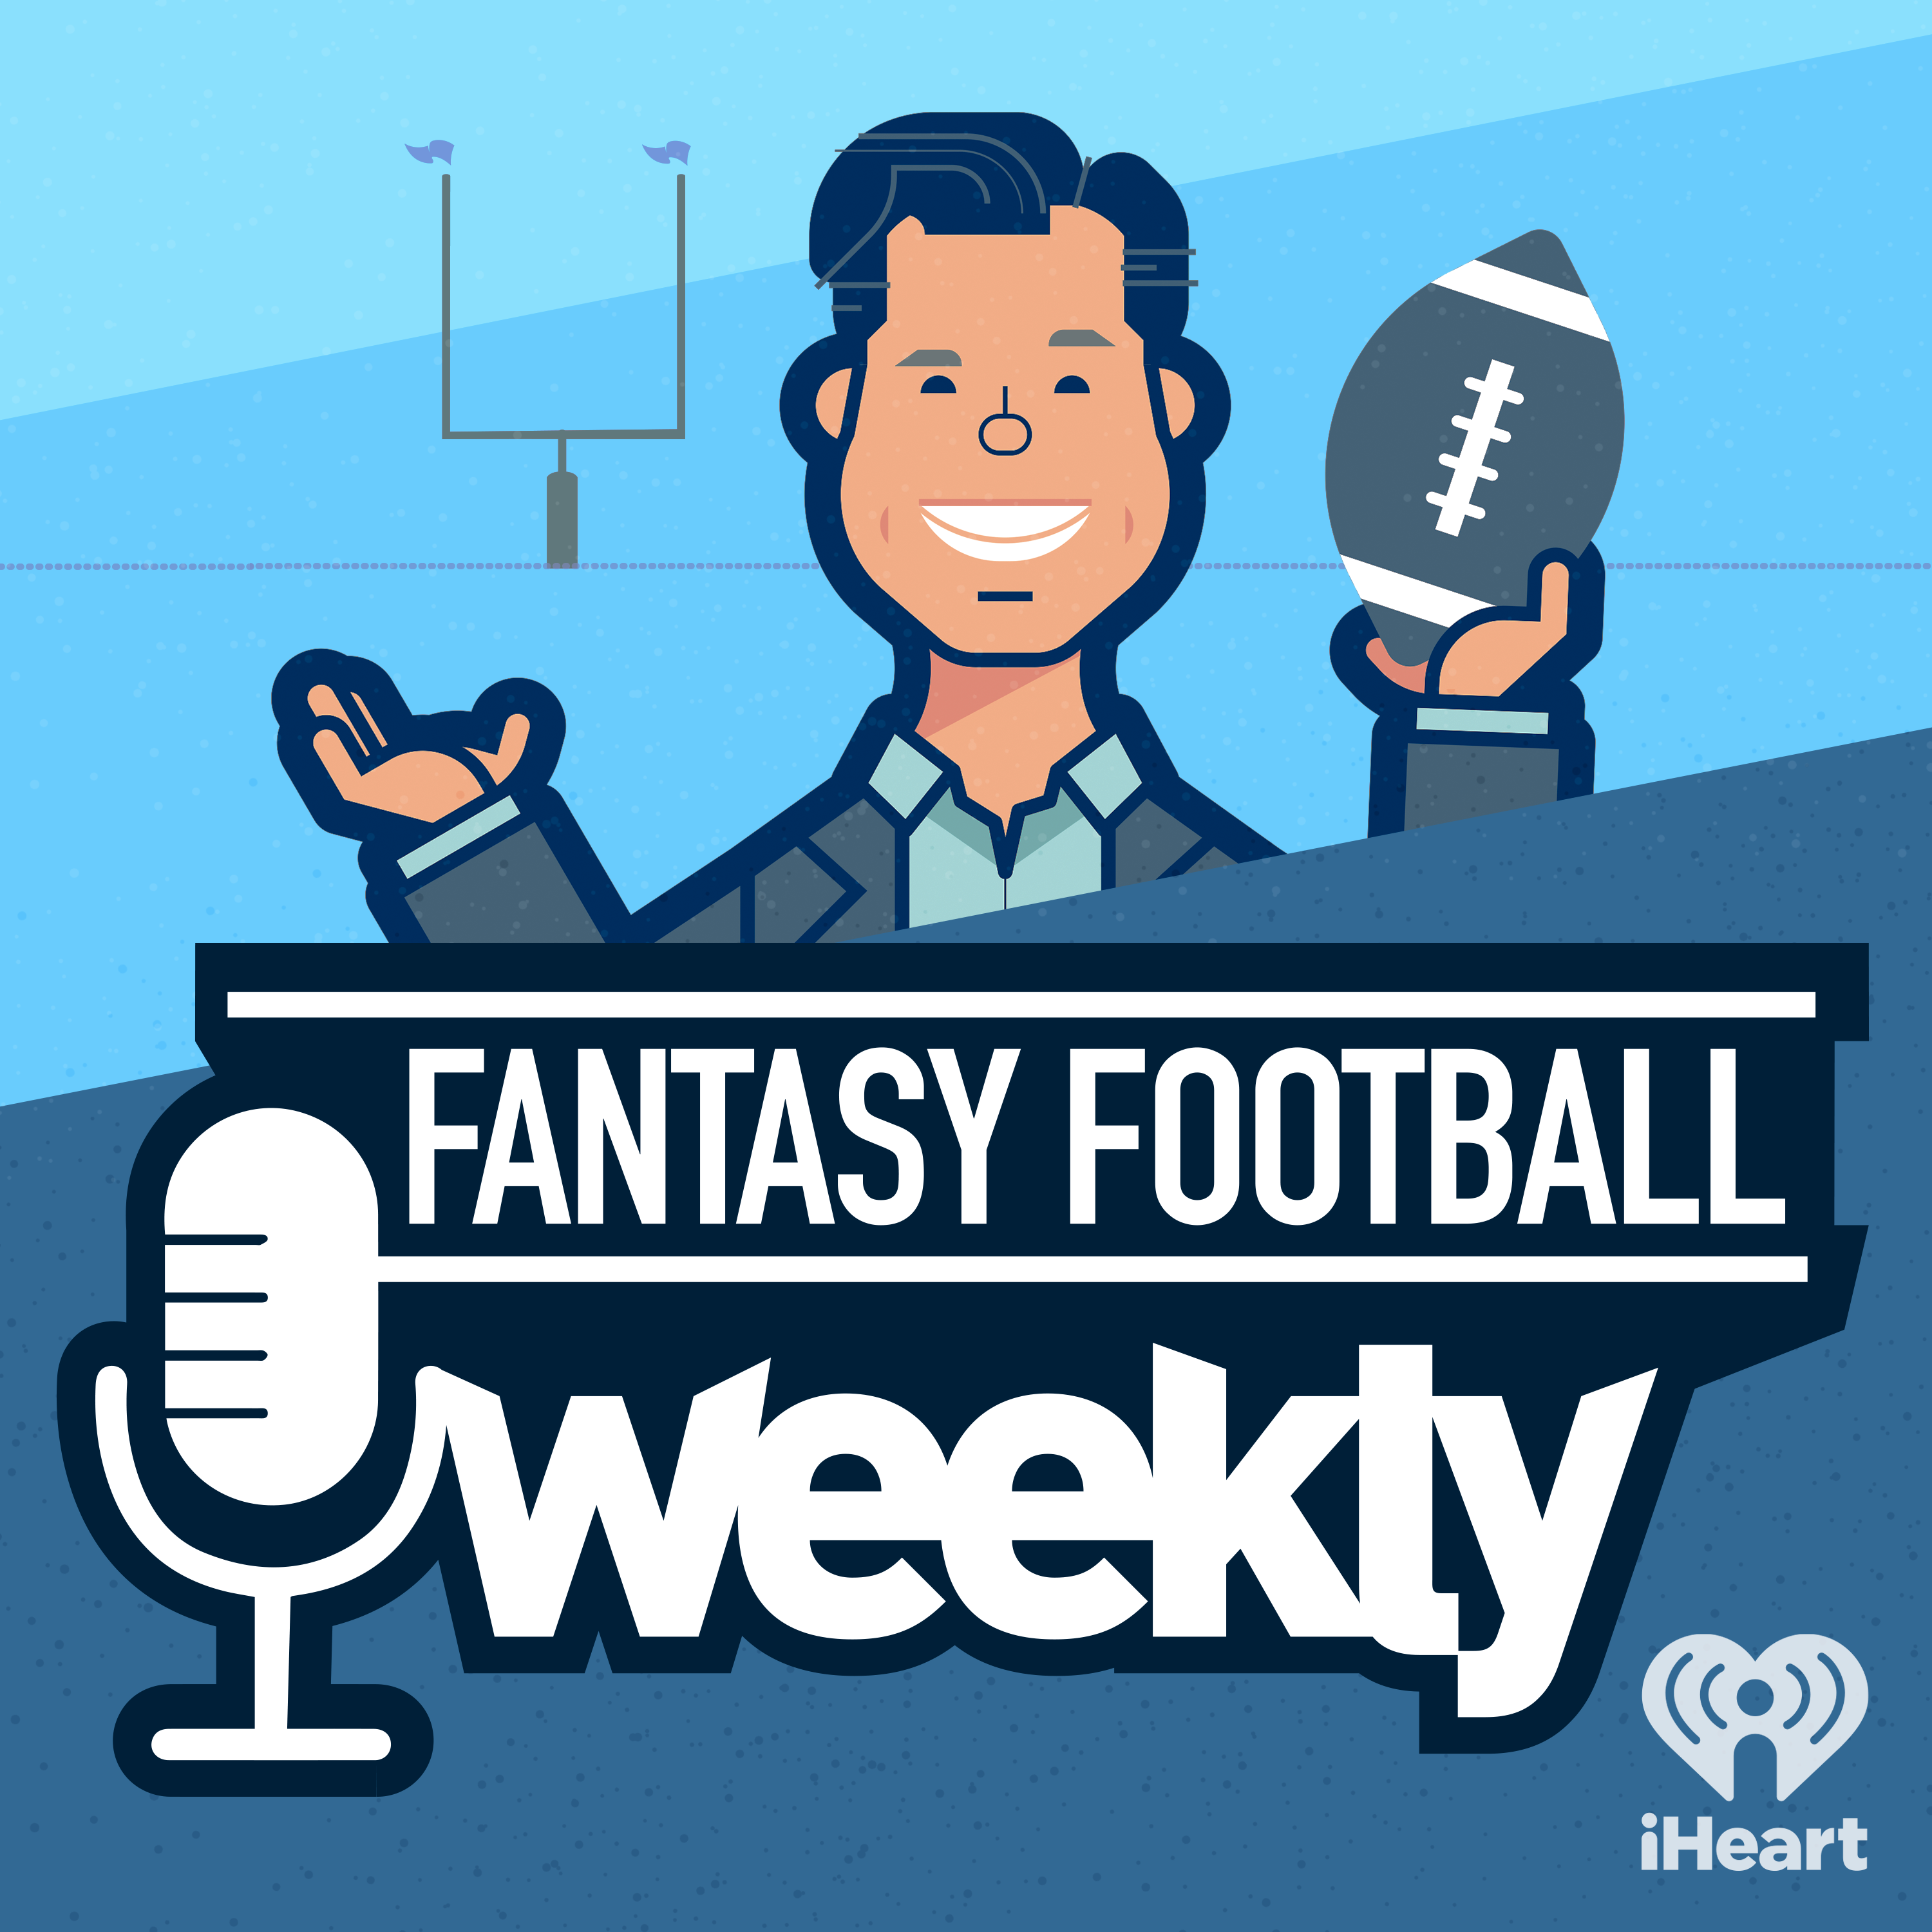 Fantasy Football Weekly week 6